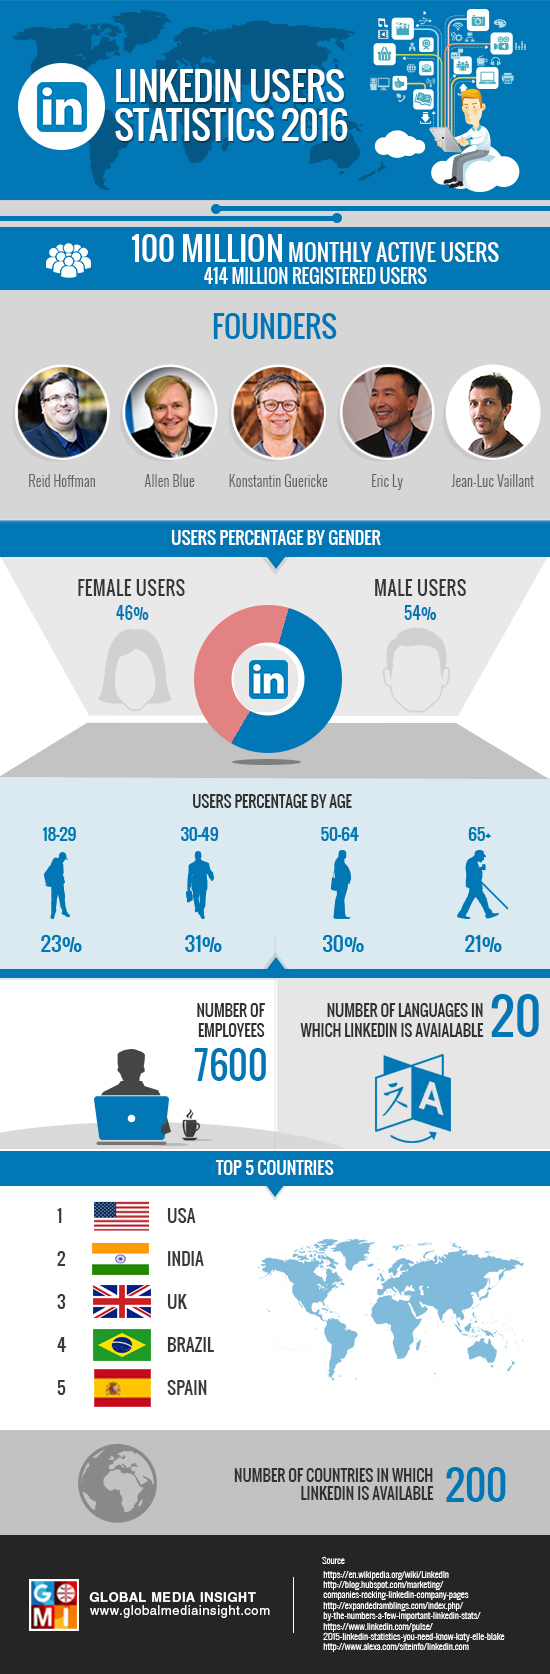 LinkedIn Users Statistics 2016